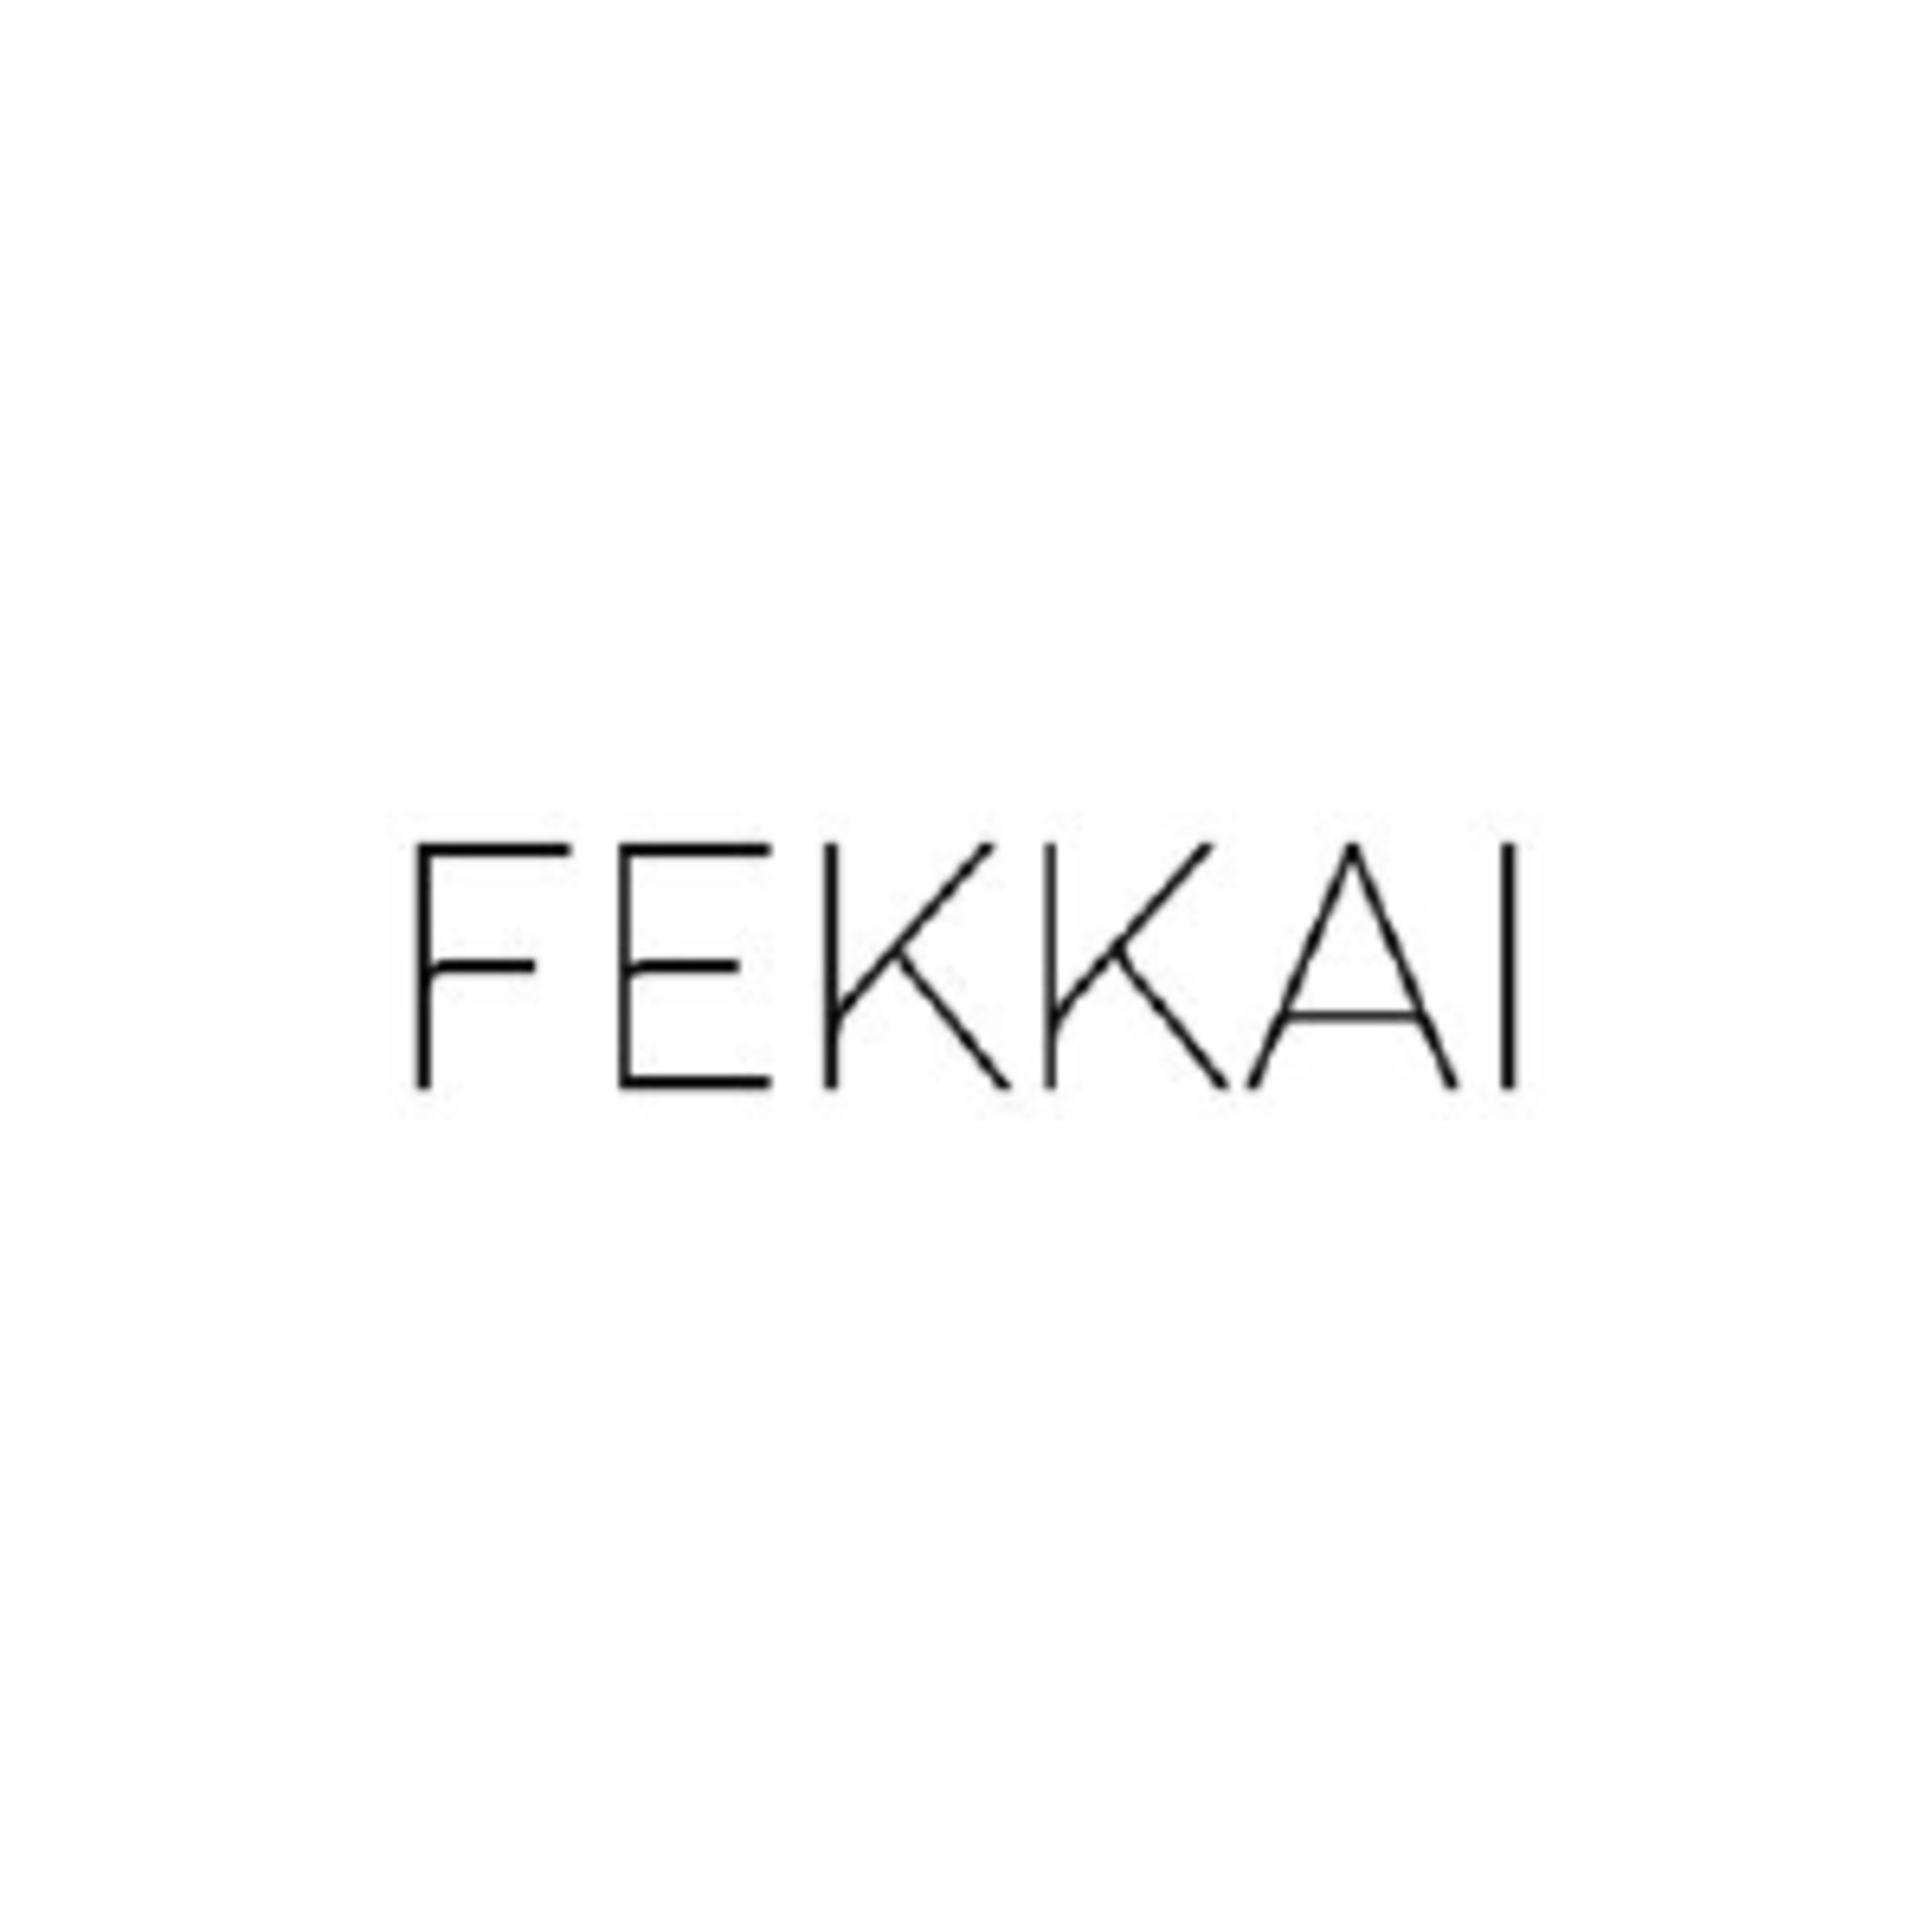 FekkaiCode